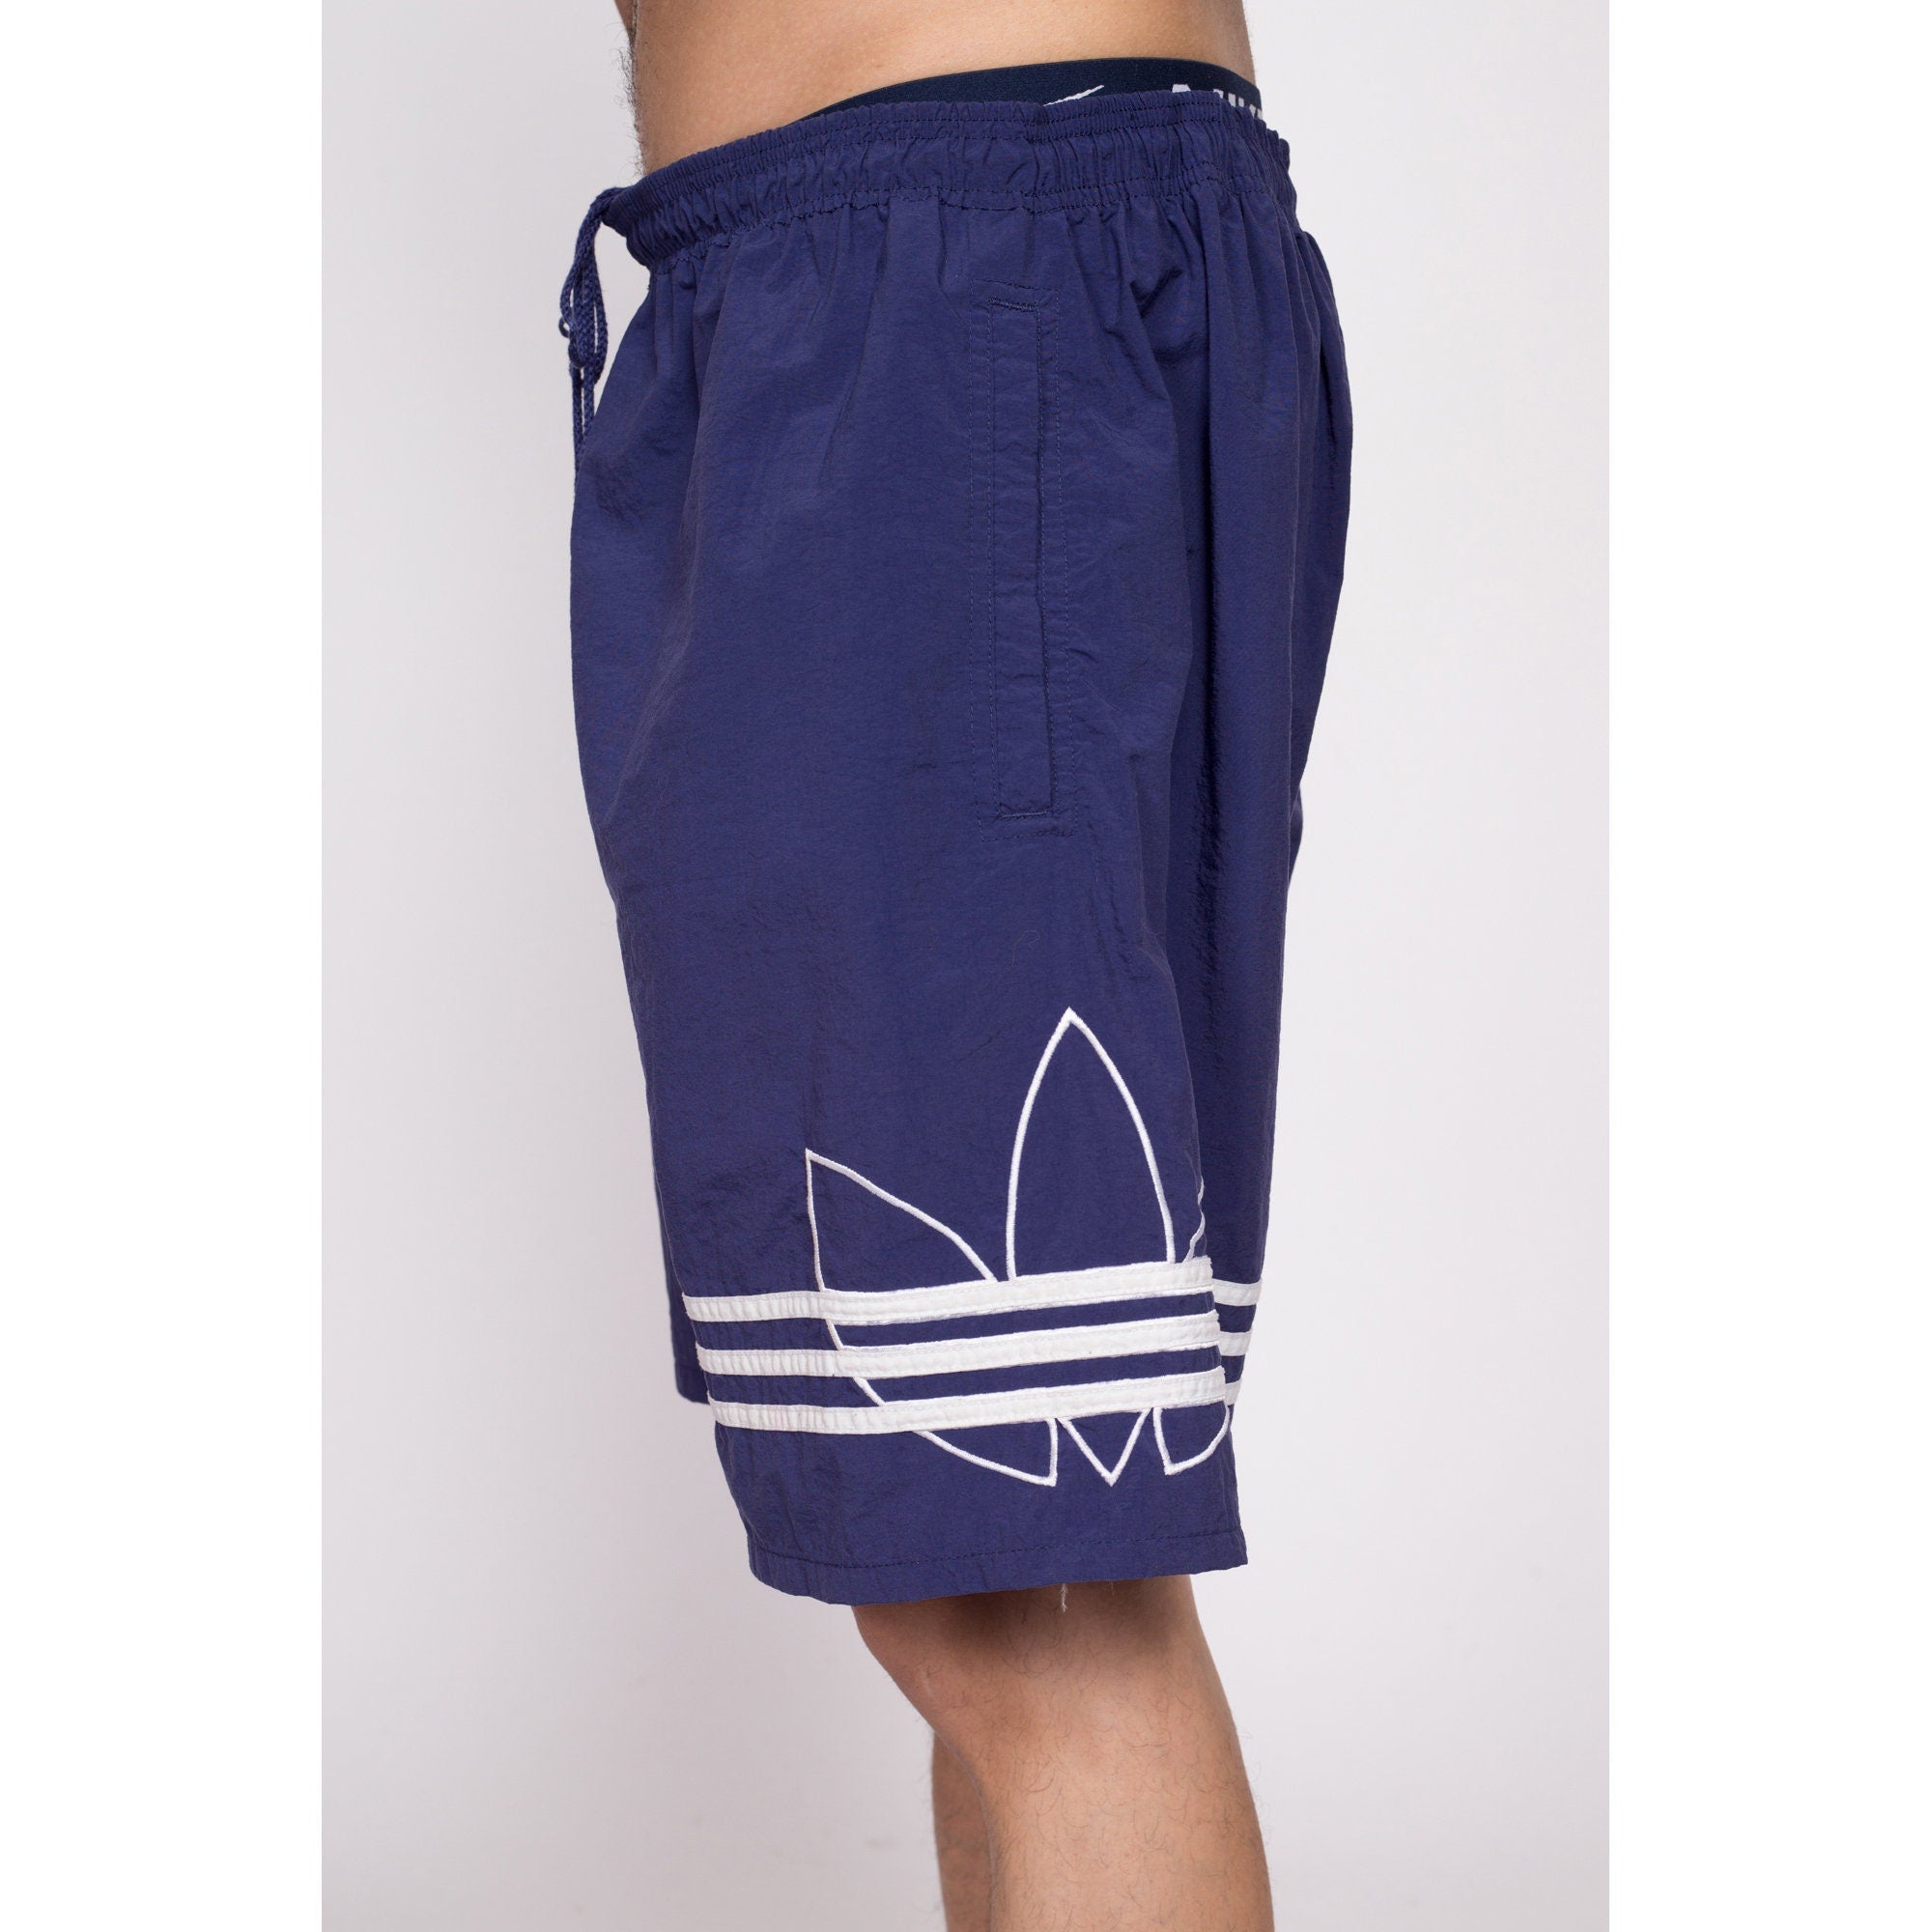 90s Adidas Trefoil Logo Track Shorts - Men's Large to XL